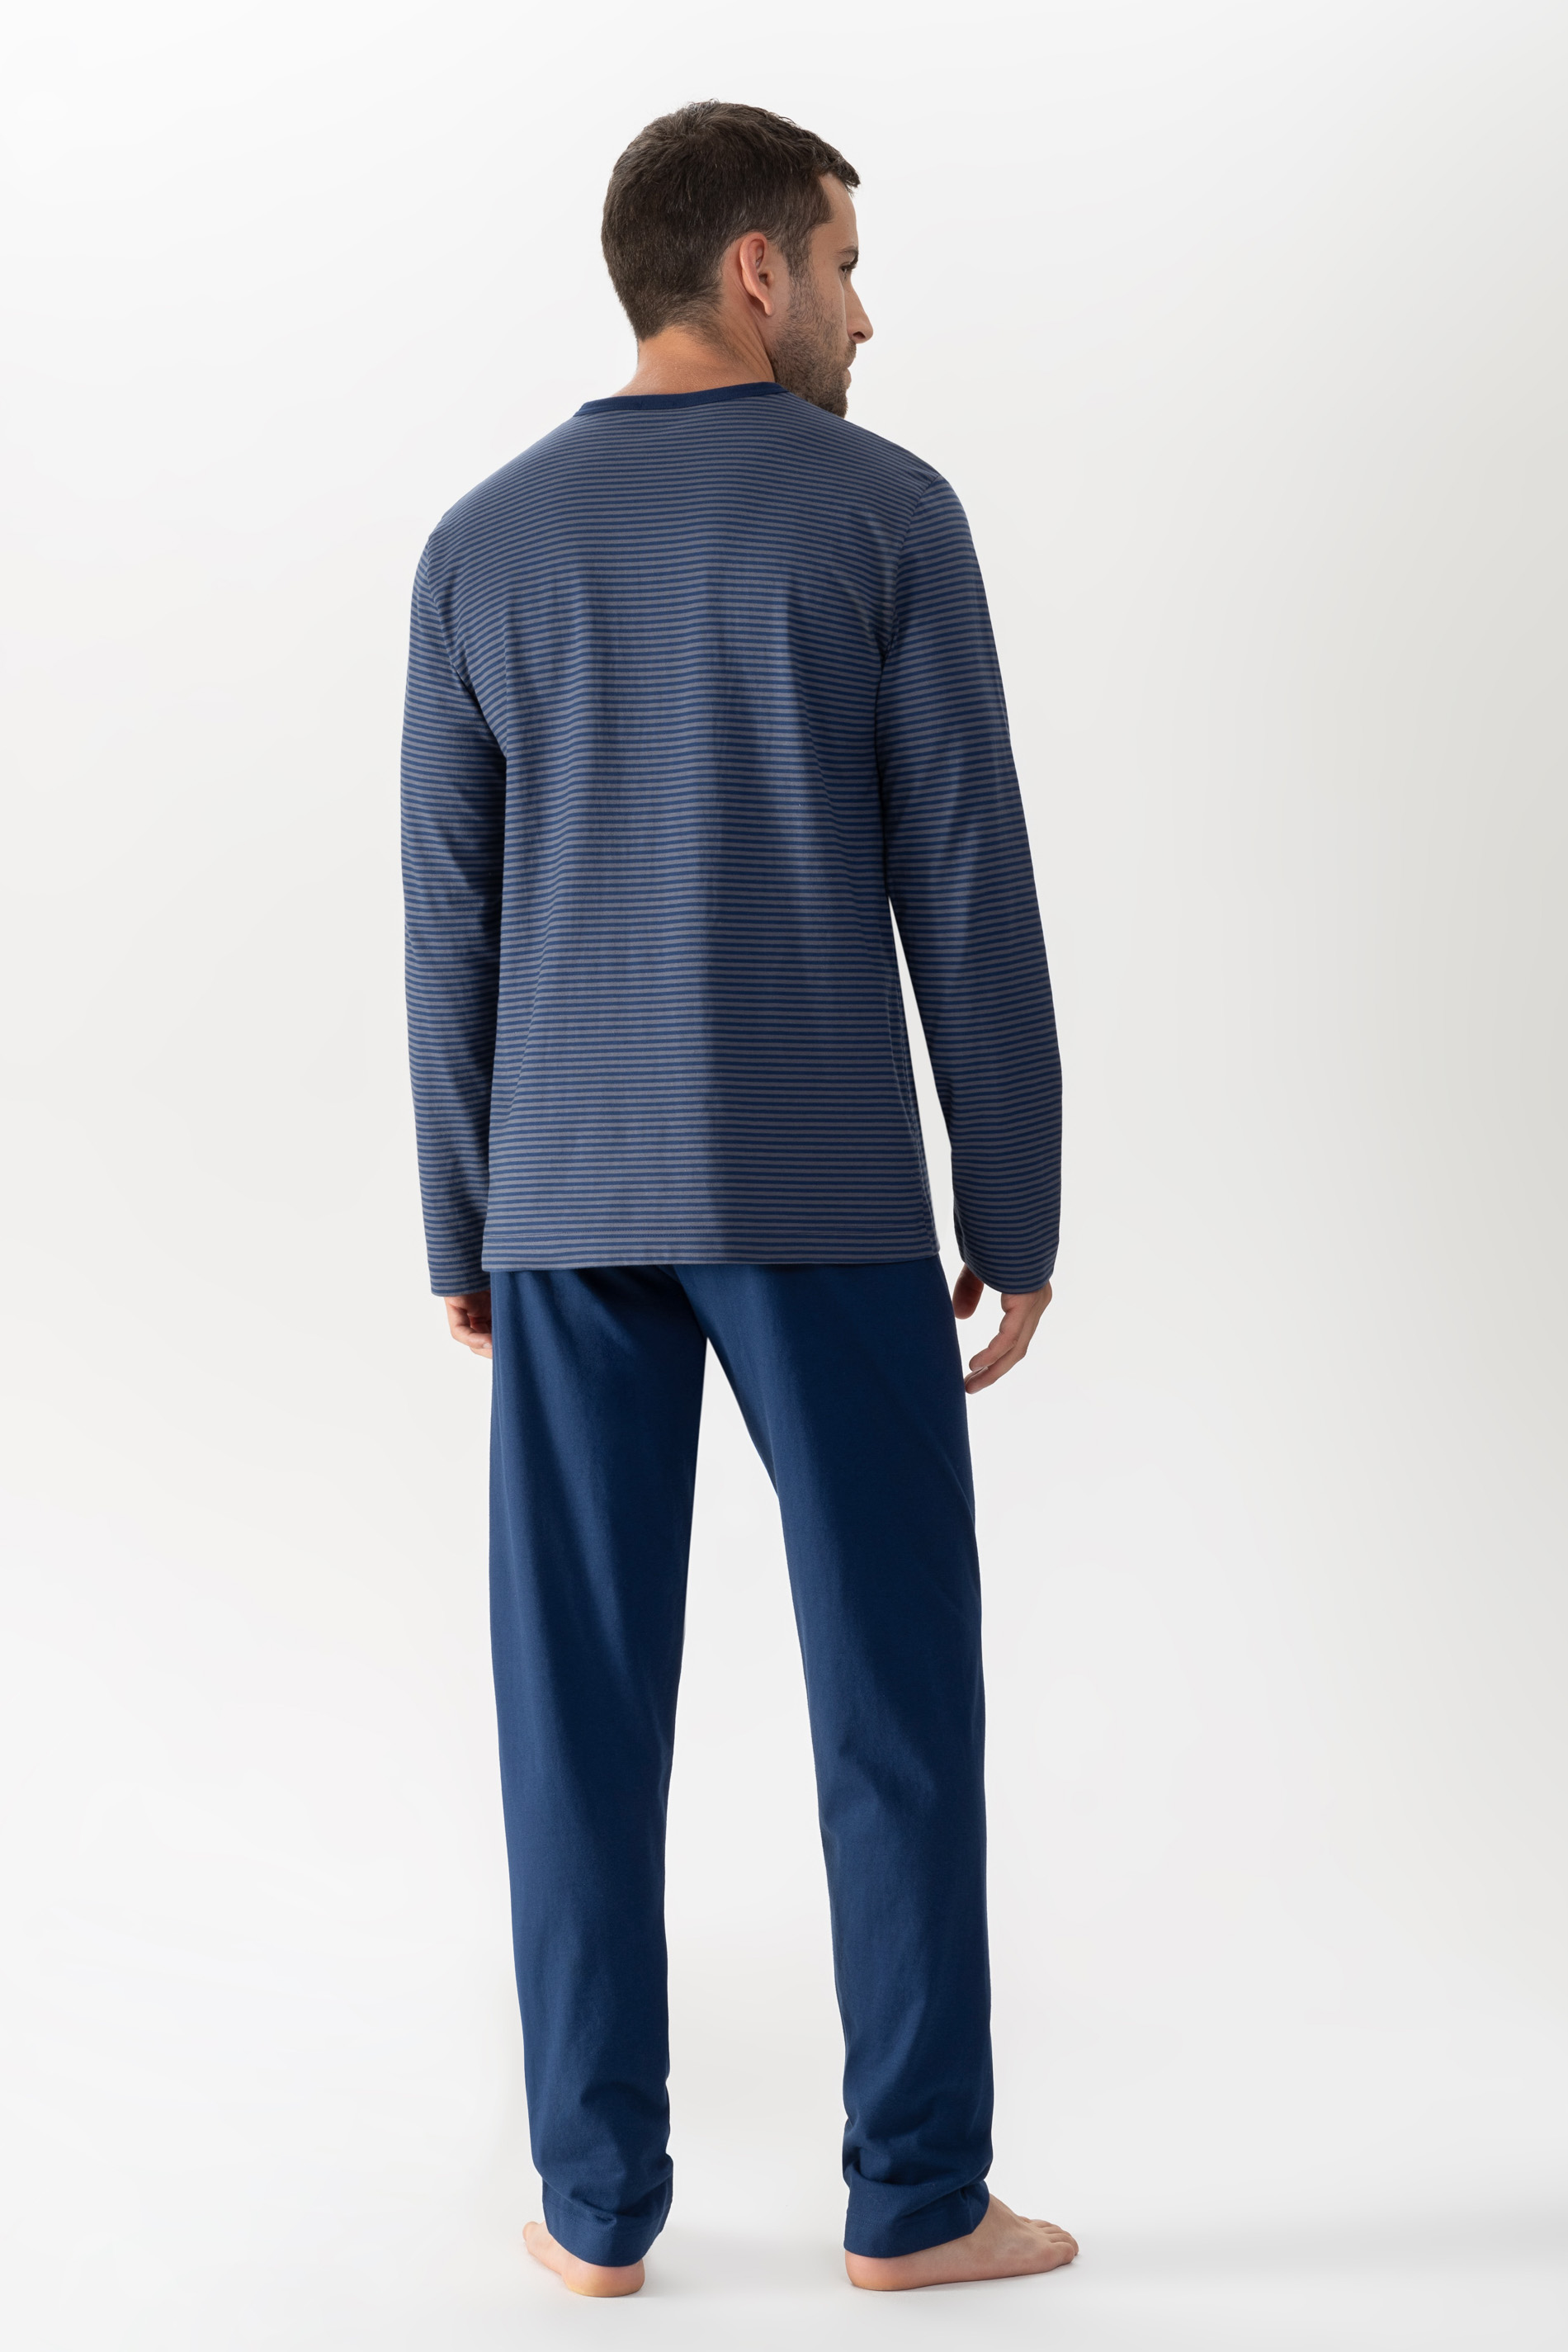 Pyjama Neptune Serie Cardwell Rear View | mey®